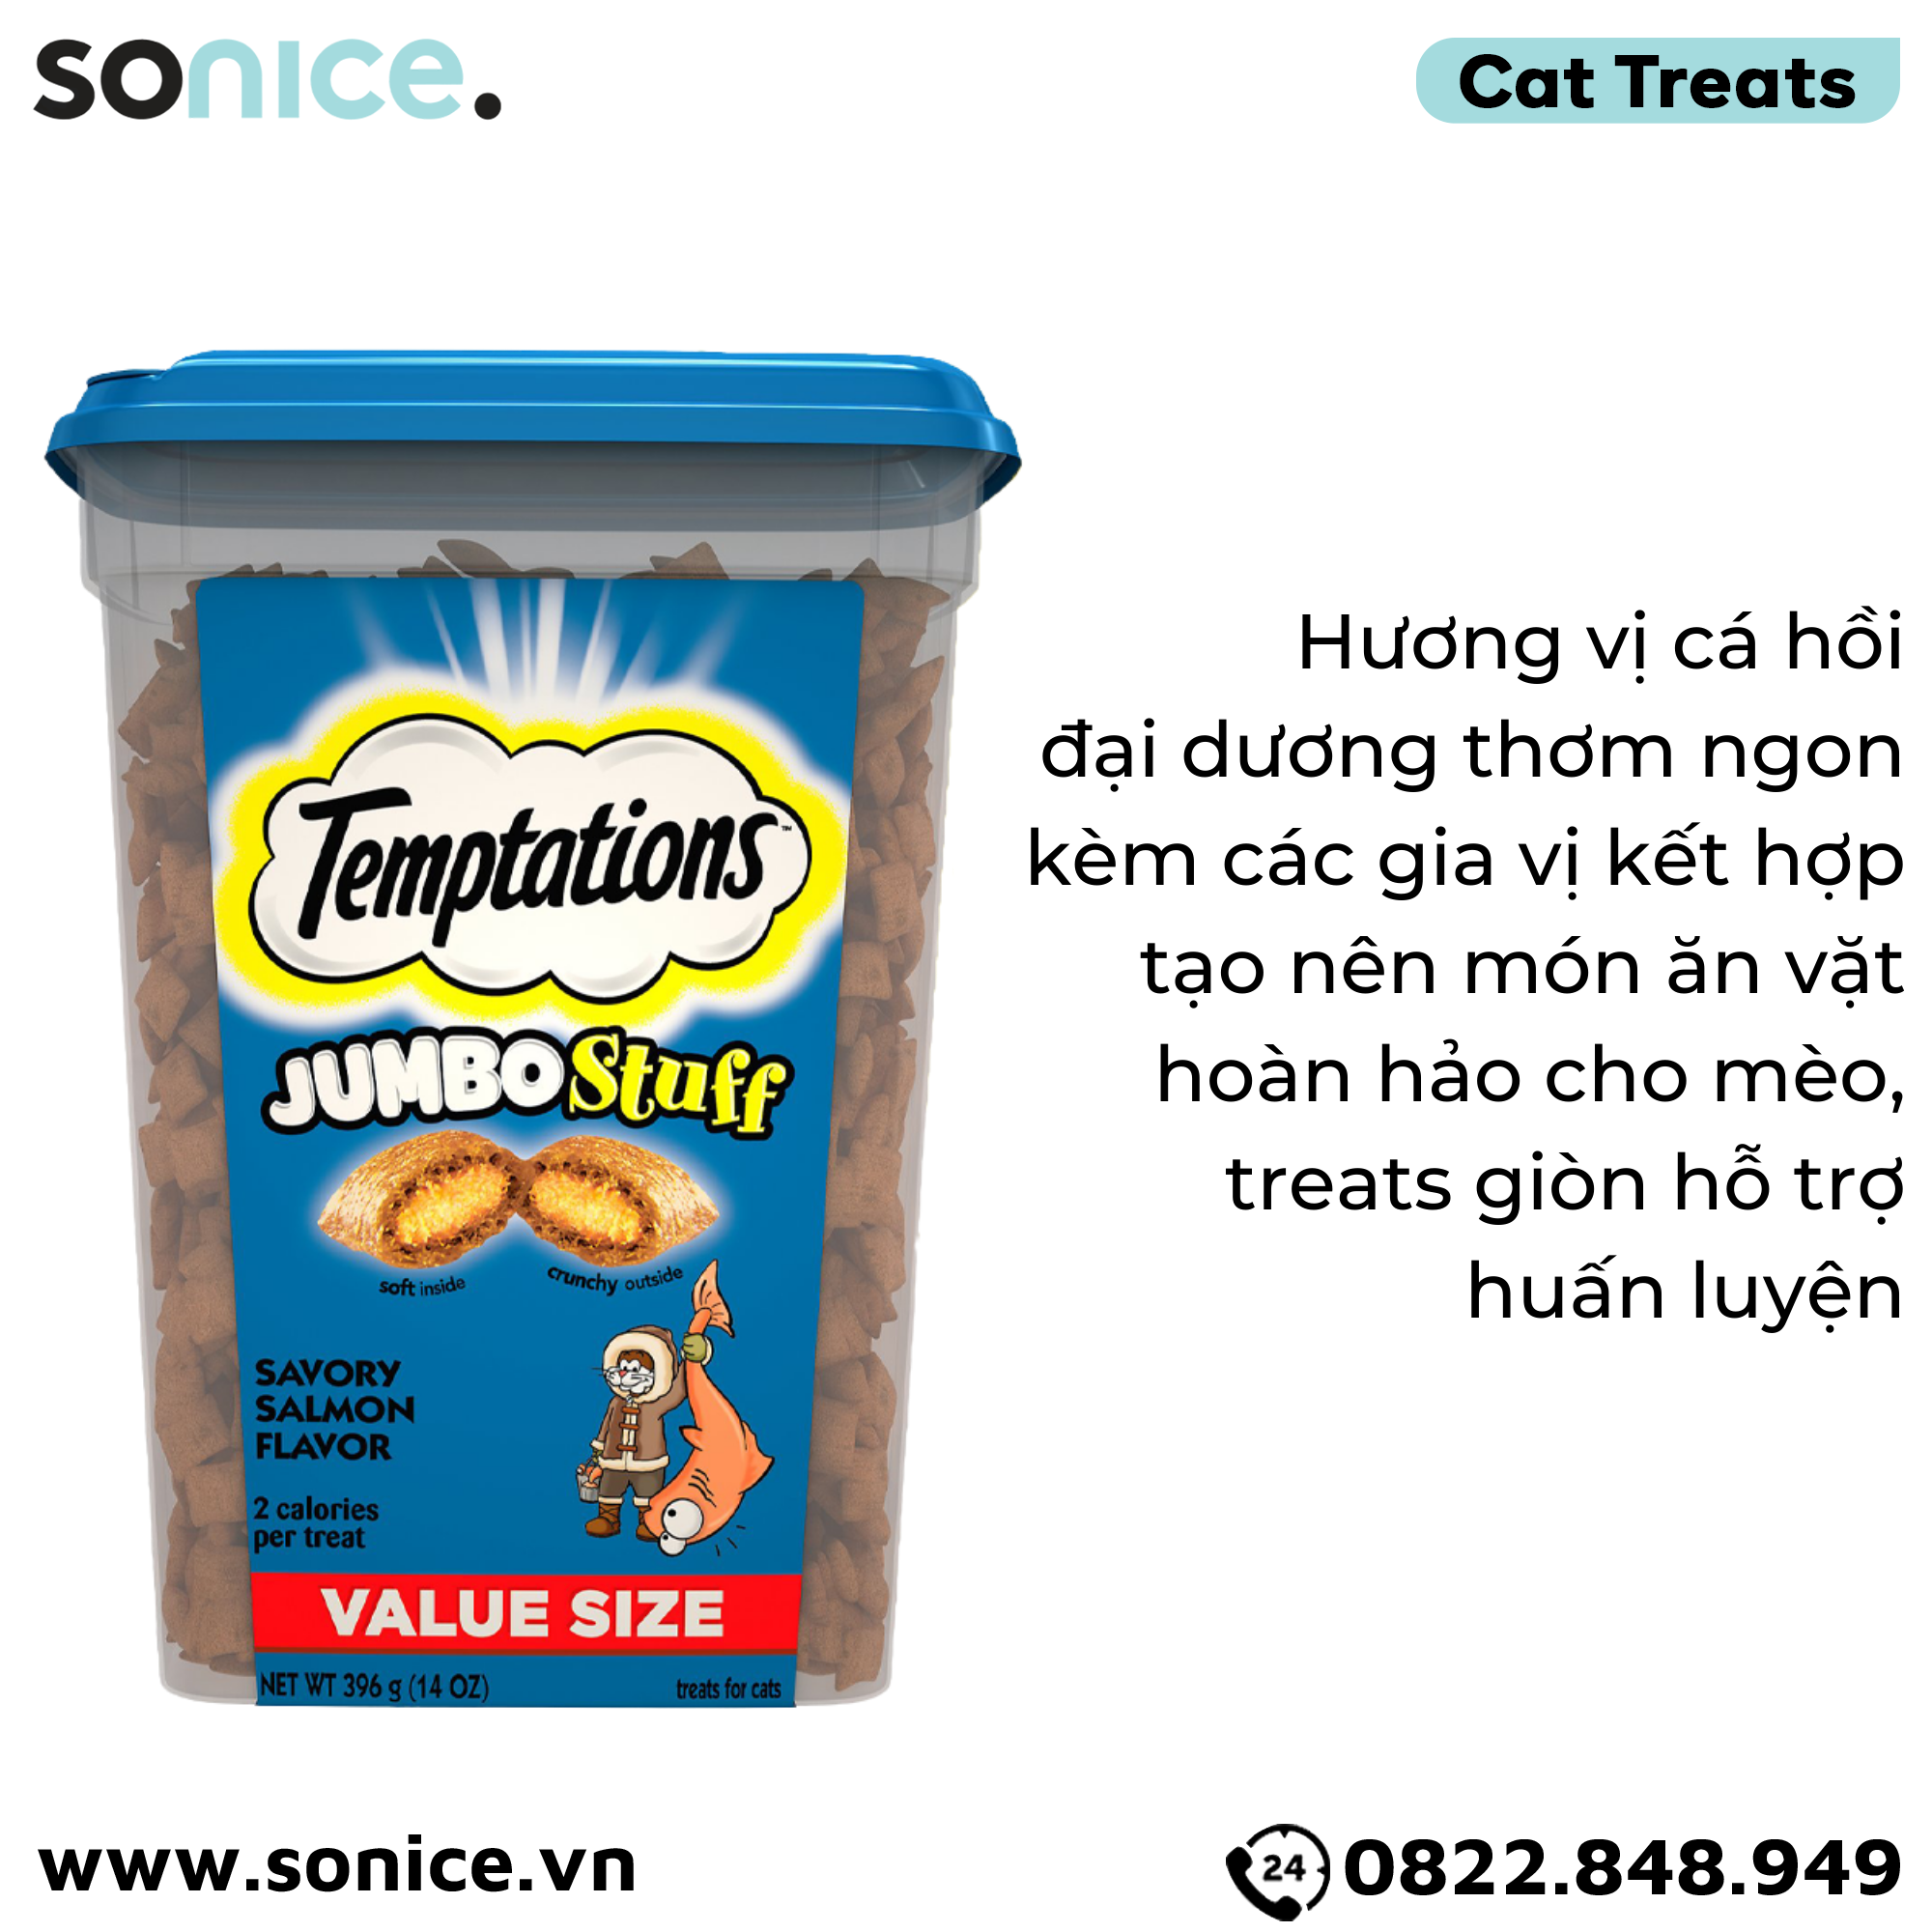  Treats mèo Temptations Jumbo Stuff Salmon 396g - Cá Hồi đại dương cat treats SONICE. 